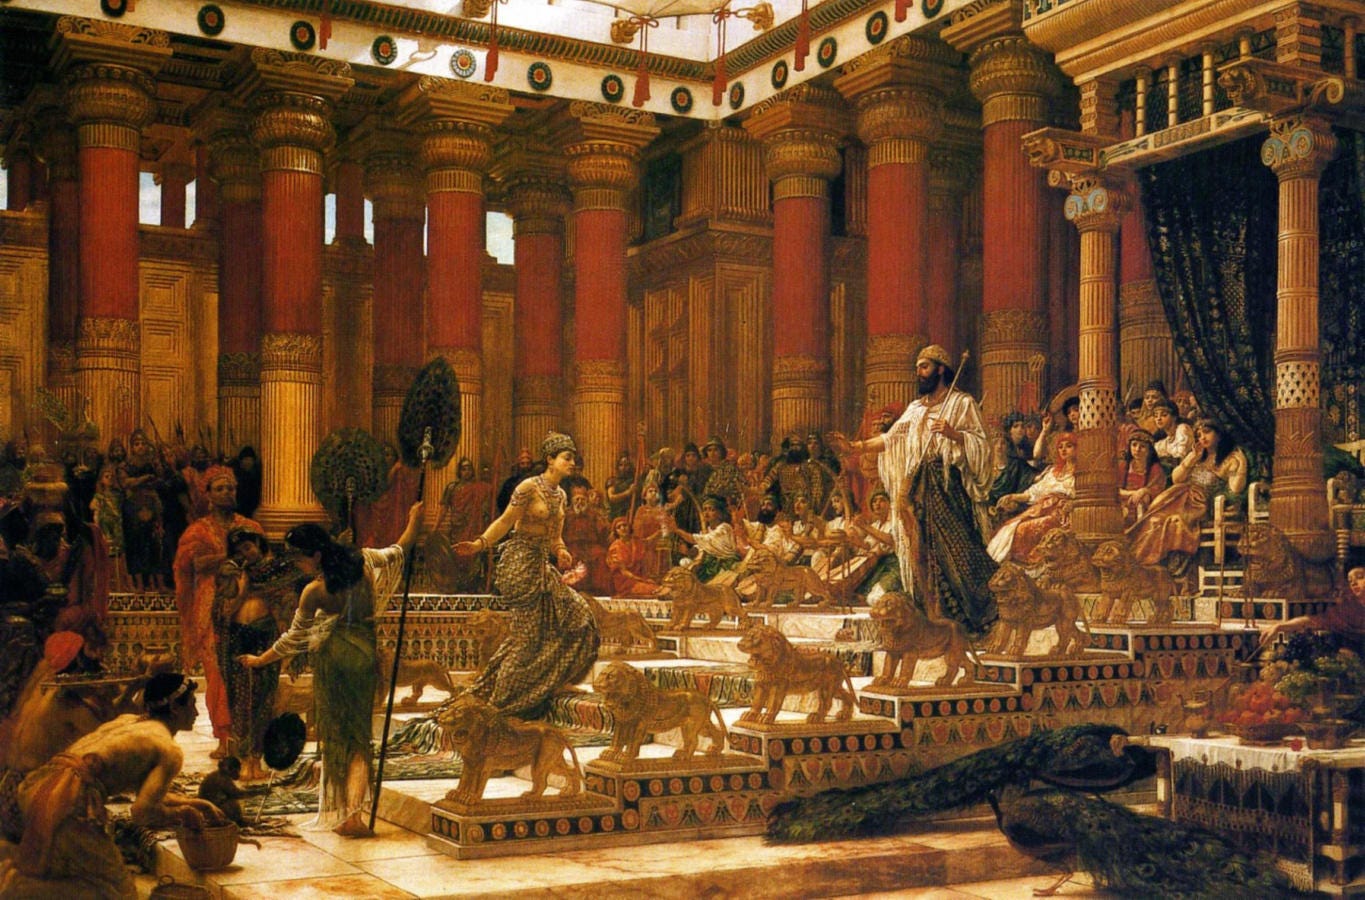 King Solomon & His Kingdom | My Jewish Learning